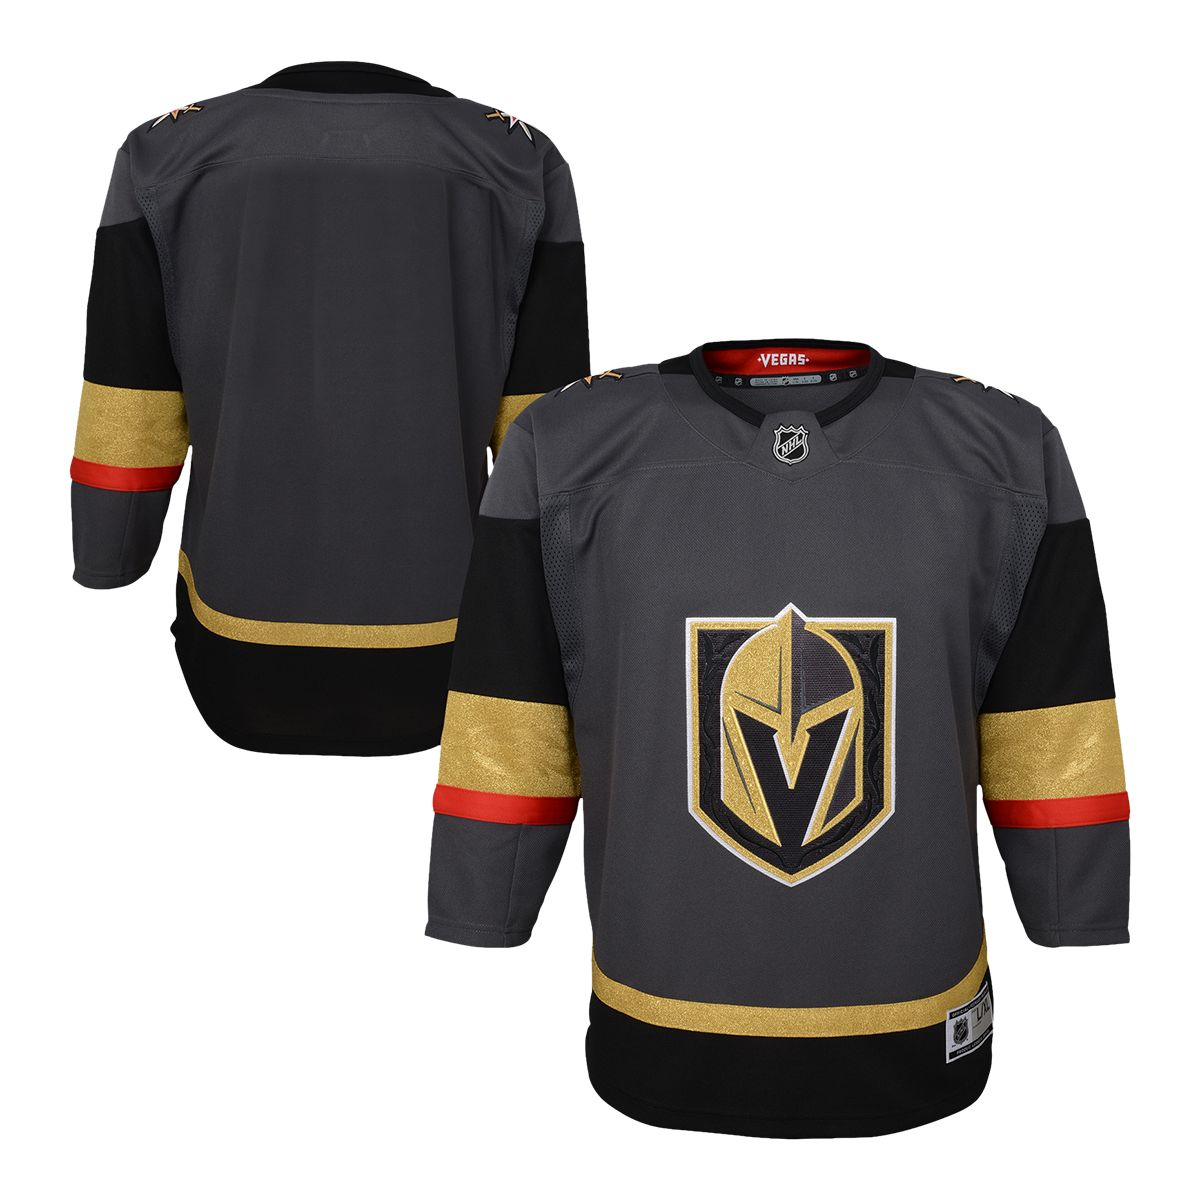 Vegas Golden Knights Alternate Uniform - National Hockey League